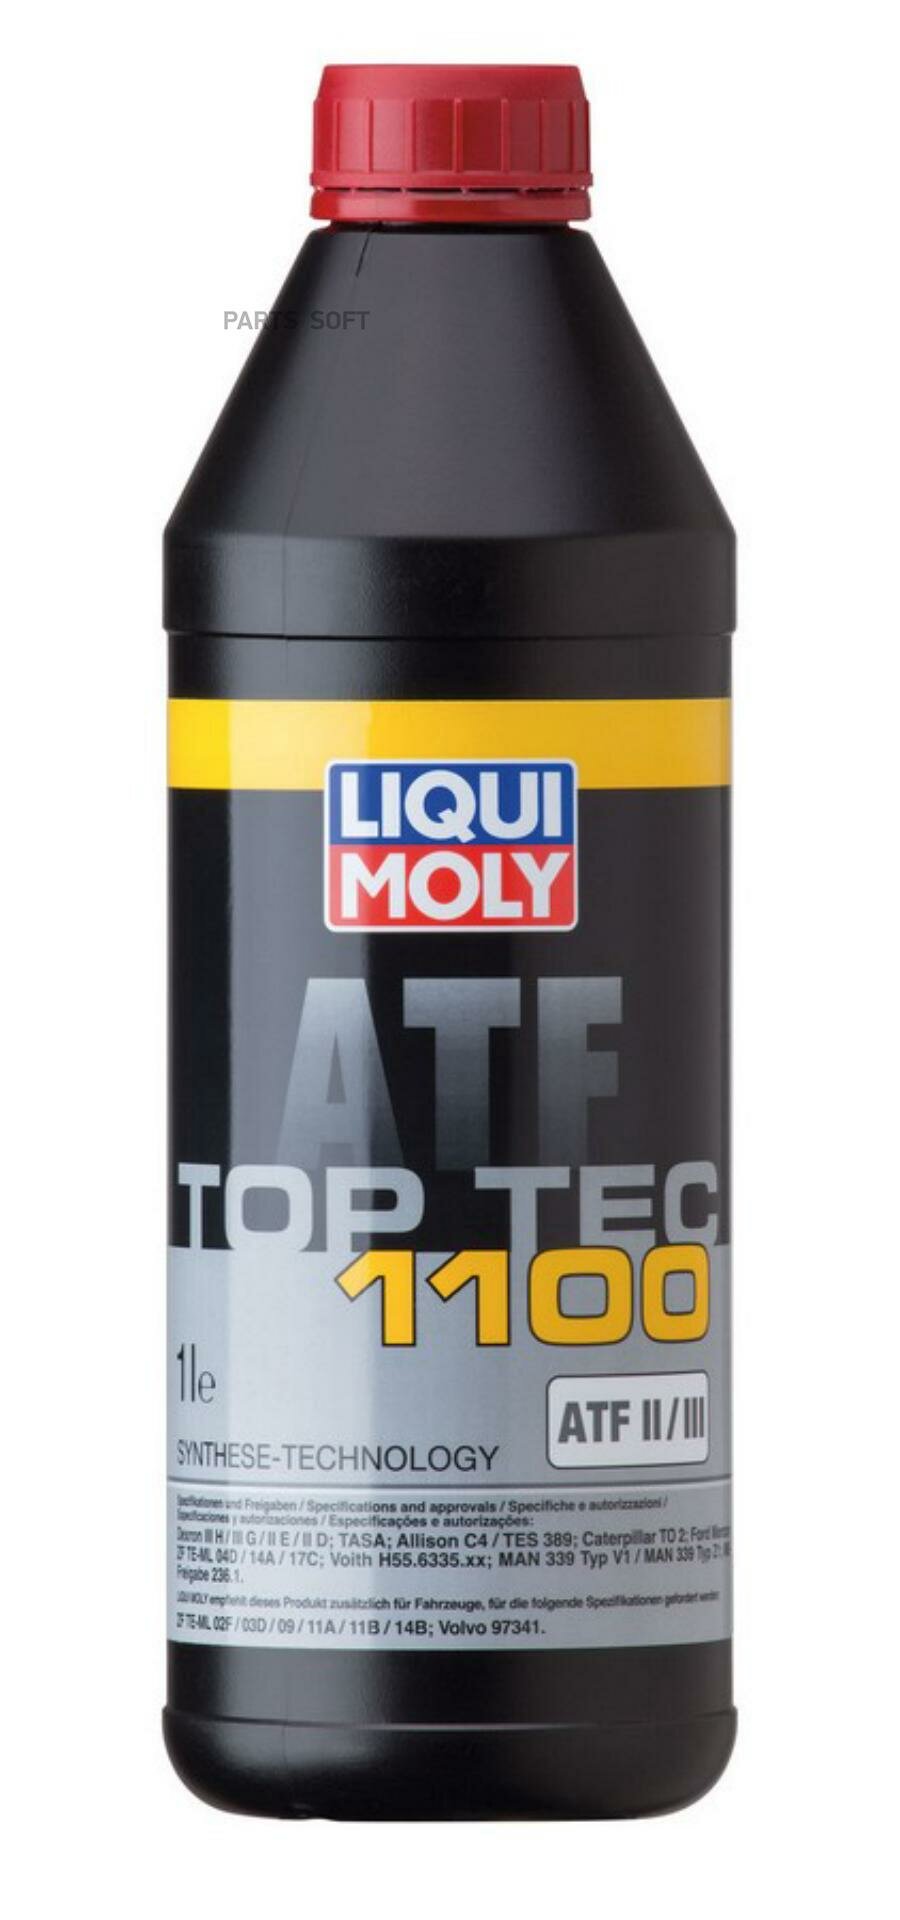 LIQUI MOLY 3651 Масо трансмиссионное Liqui Moly Top Tec ATF 1100 дя АКПП 1 (анаог арт. 7626, арт. )